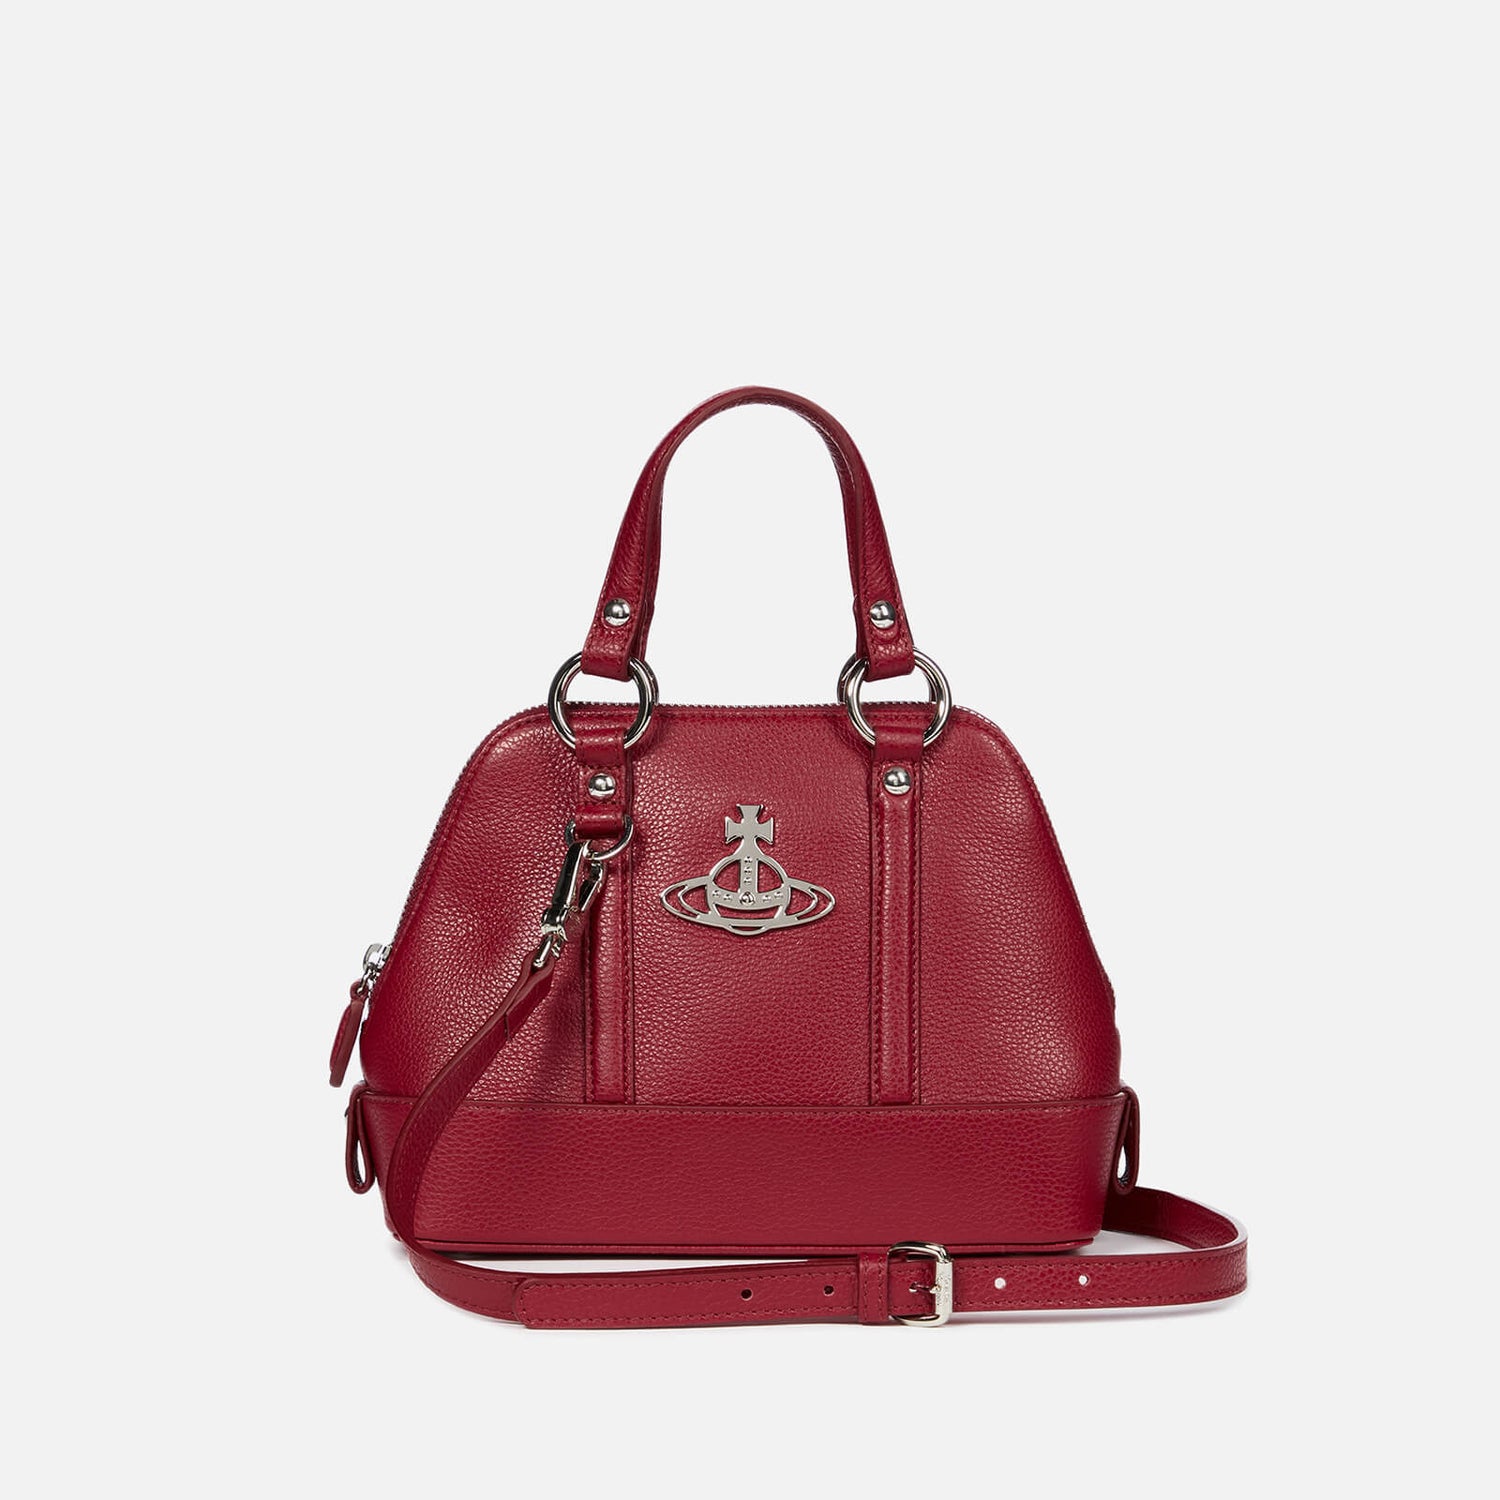 Vivienne Westwood Women's Jordan Small Handbag - Red